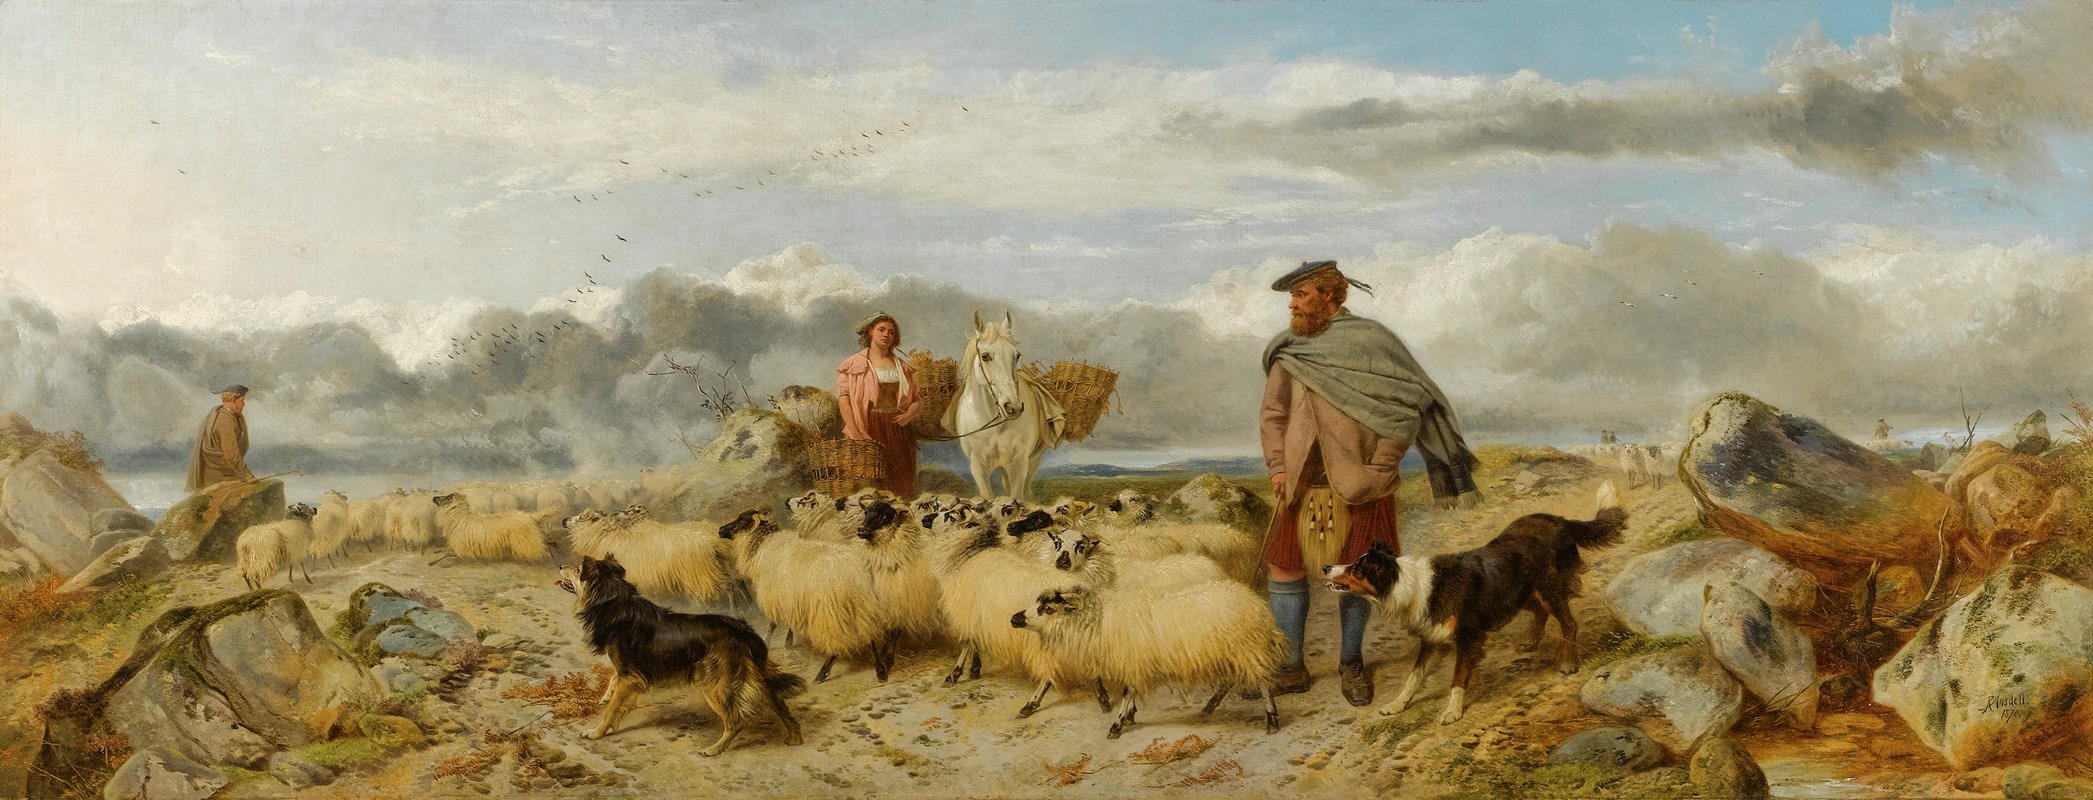 Richard Ansdell - Gathering The Flock